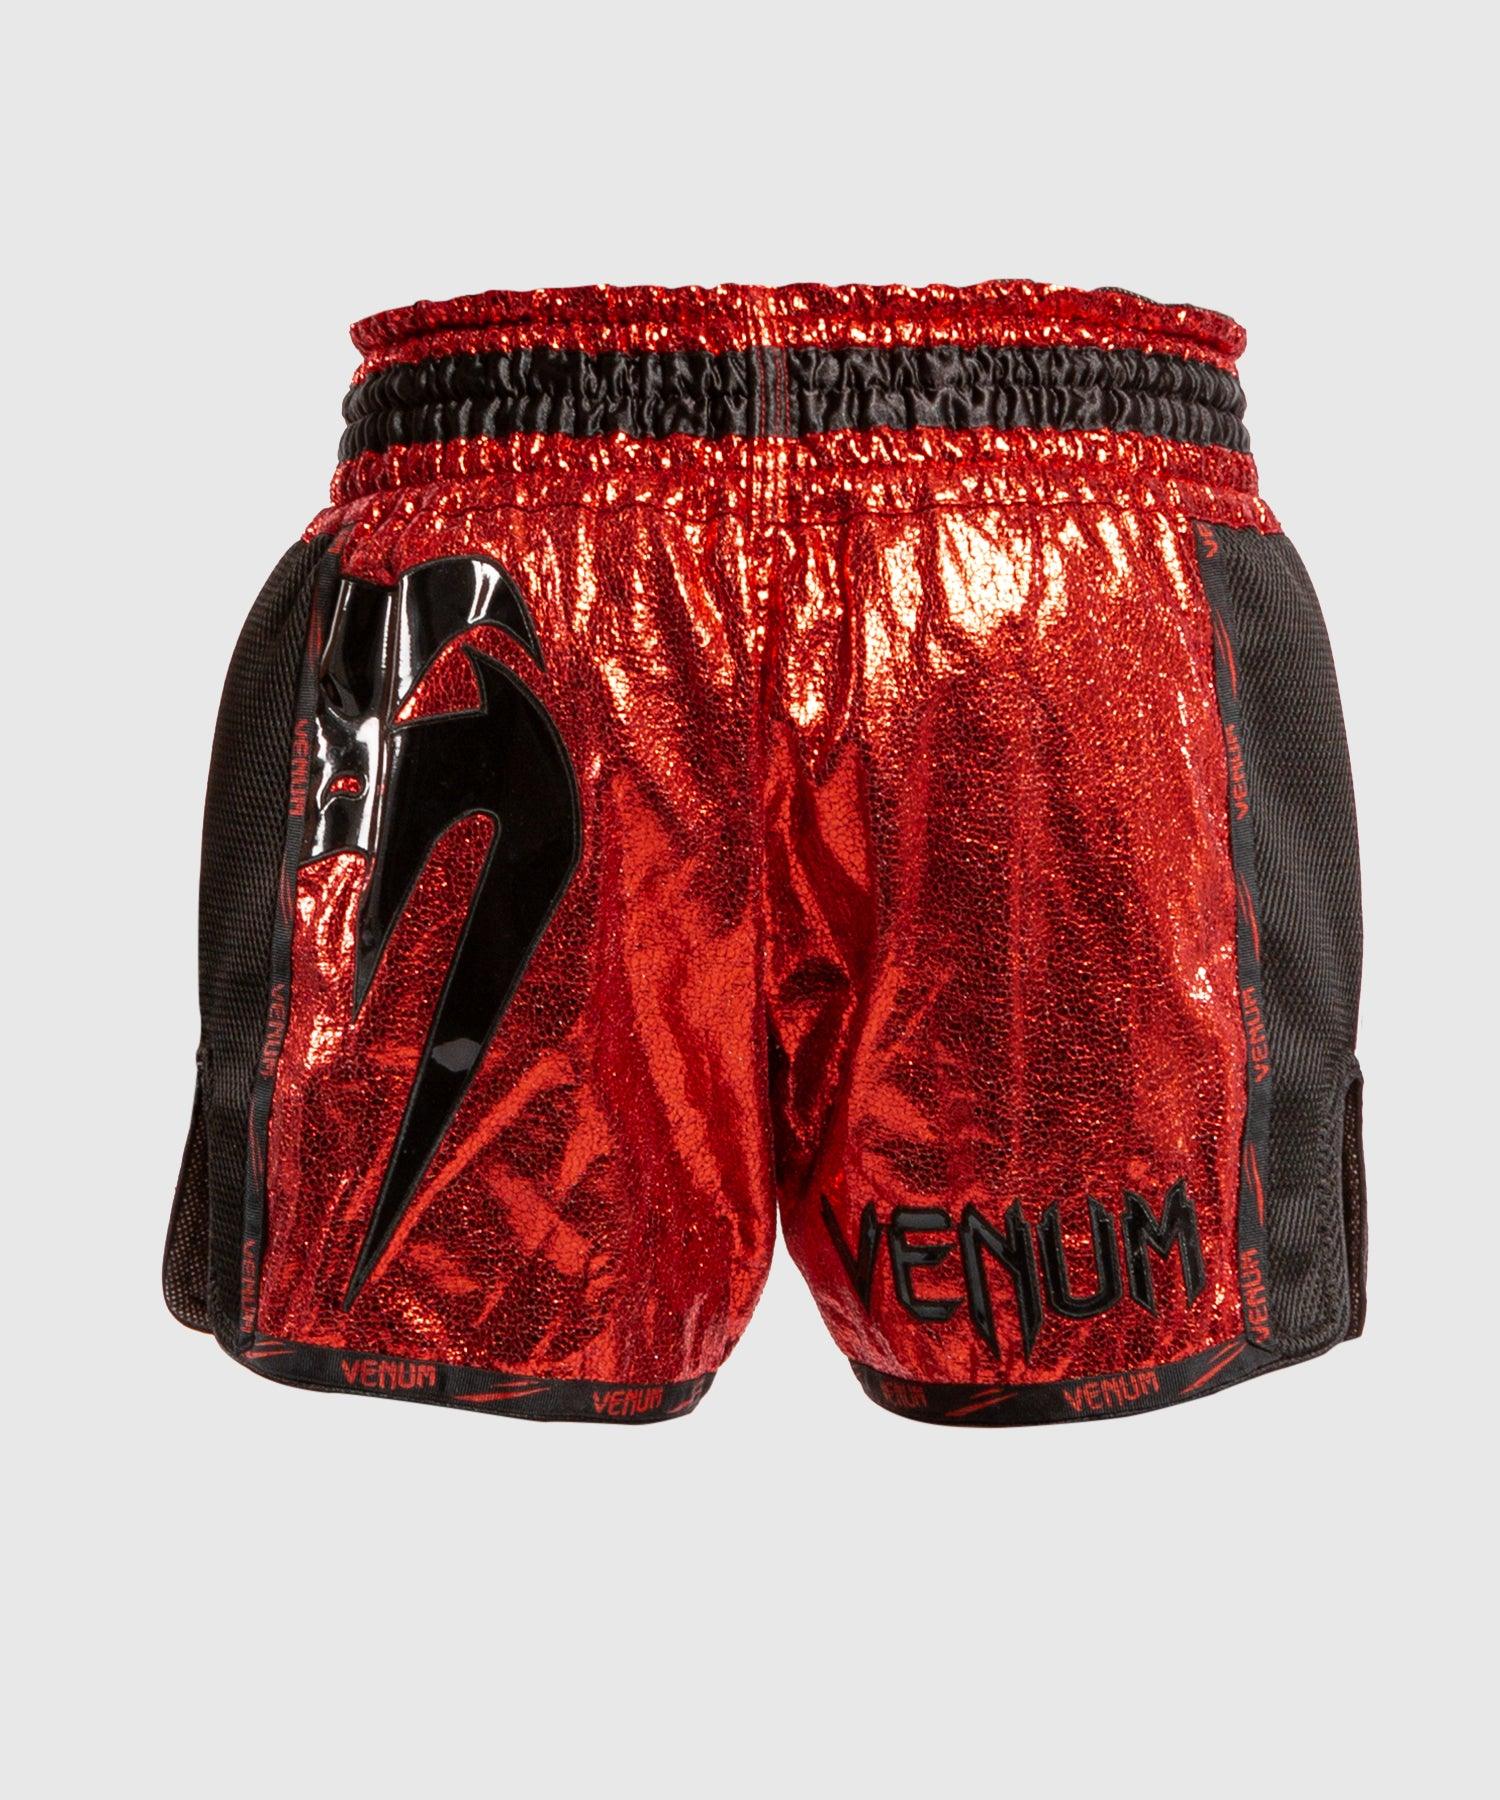 Venum Giant Foil Muay Thai Shorts - Red/Black - Venum